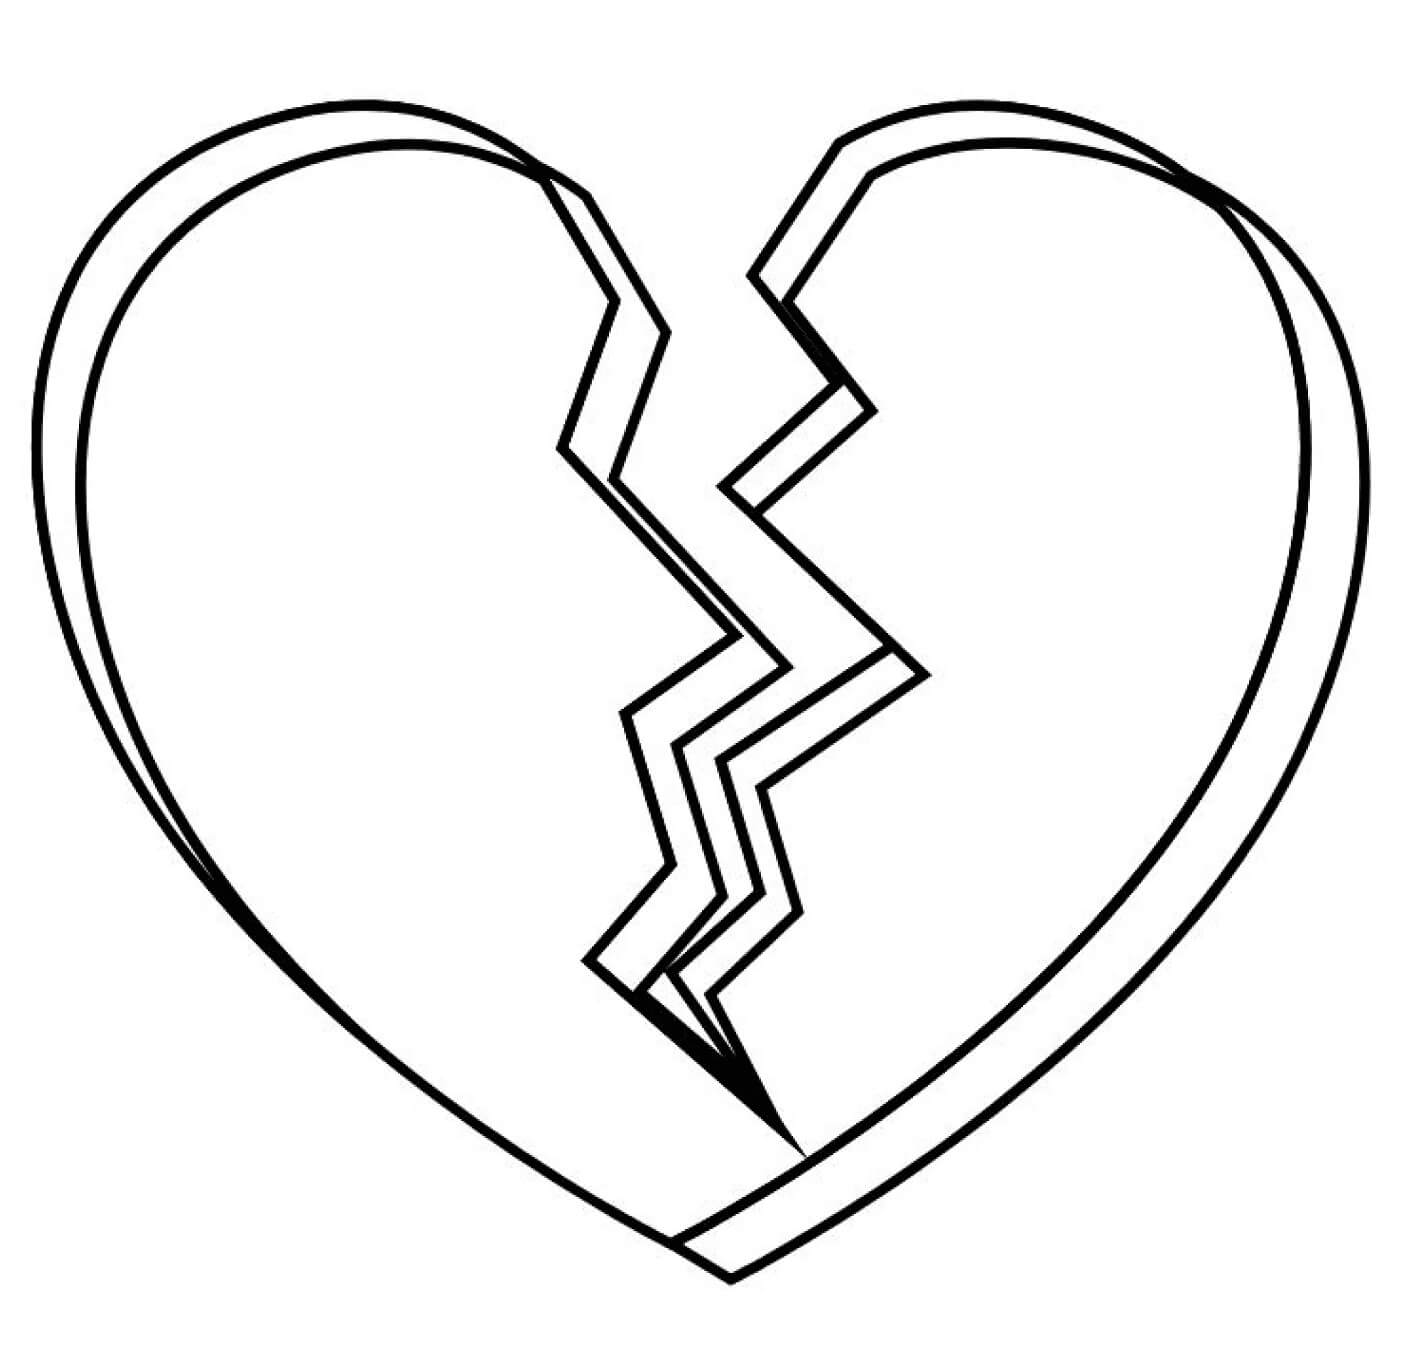 Broken Heart Free Design coloring page - Download, Print or Color ...